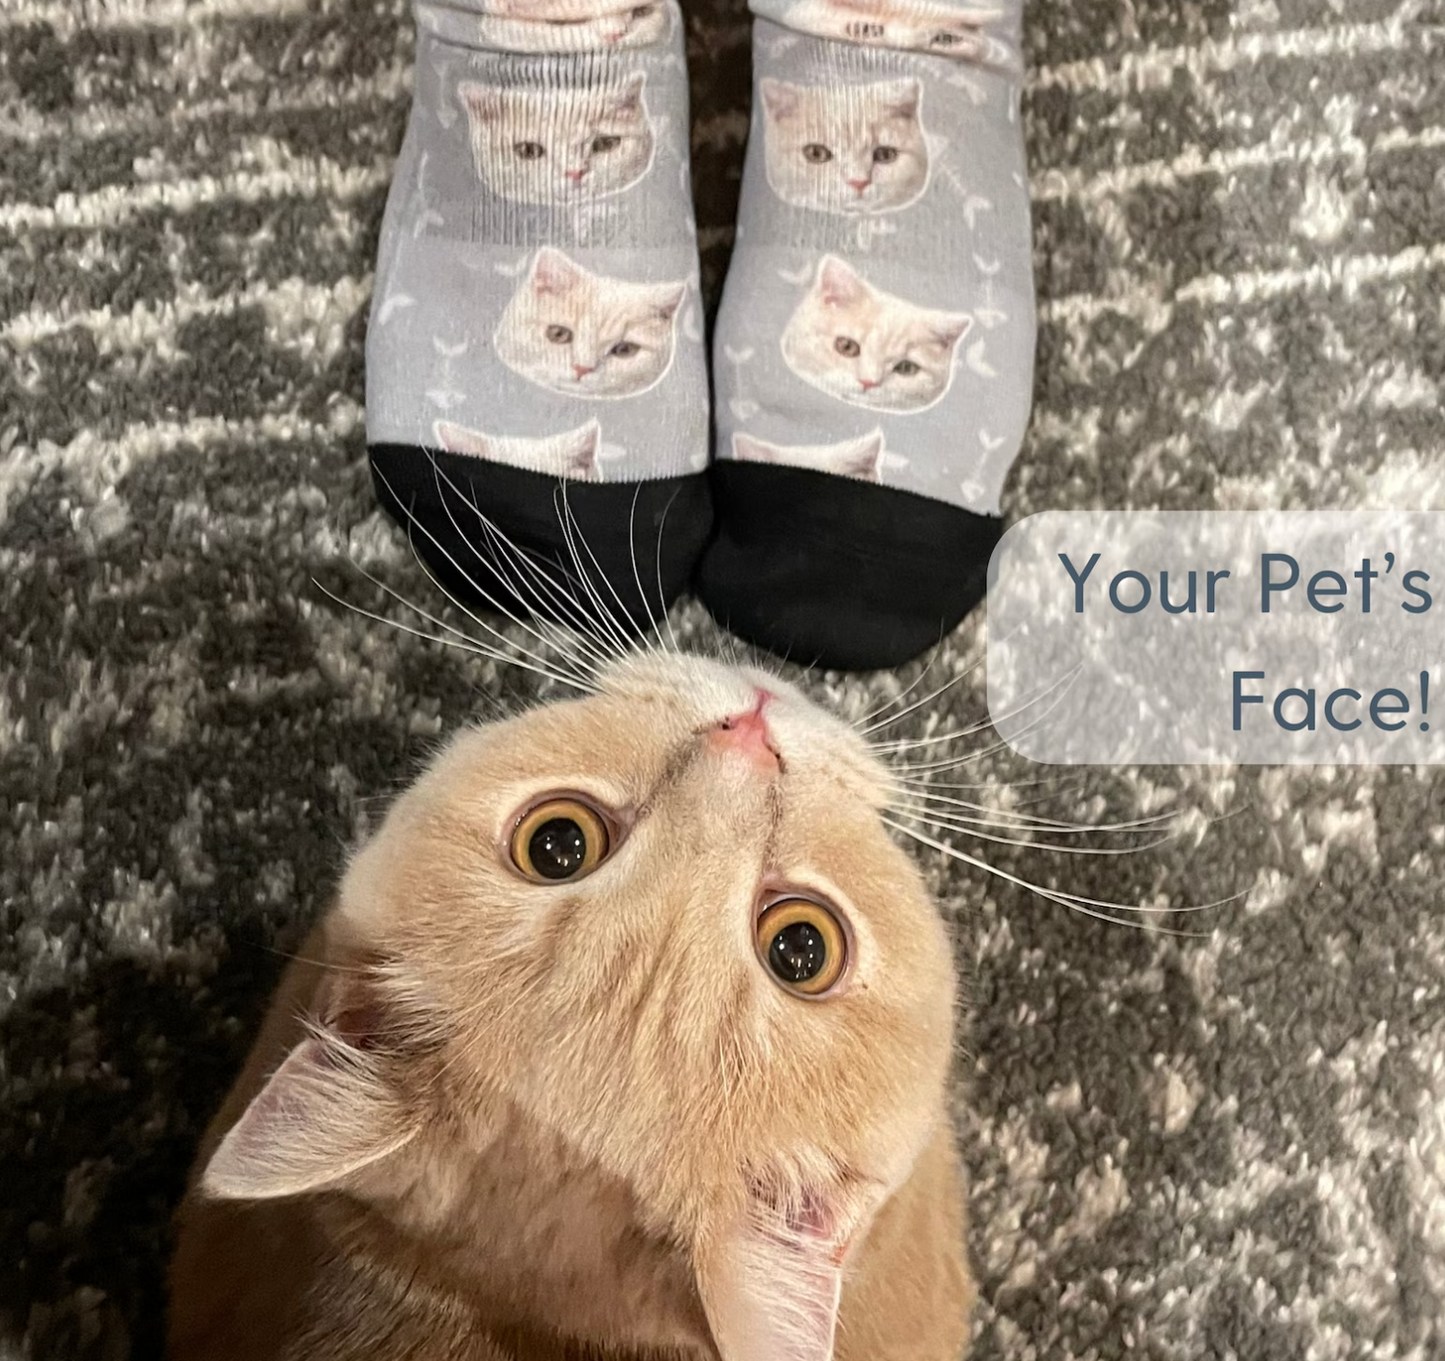 Custom Pet Photo Socks Personalized Pet Socks Custom Dog Socks Custom Cat Socks Fathers Day Gifts Cat Dad Gift Dog Dad Gifts Dog Face Socks